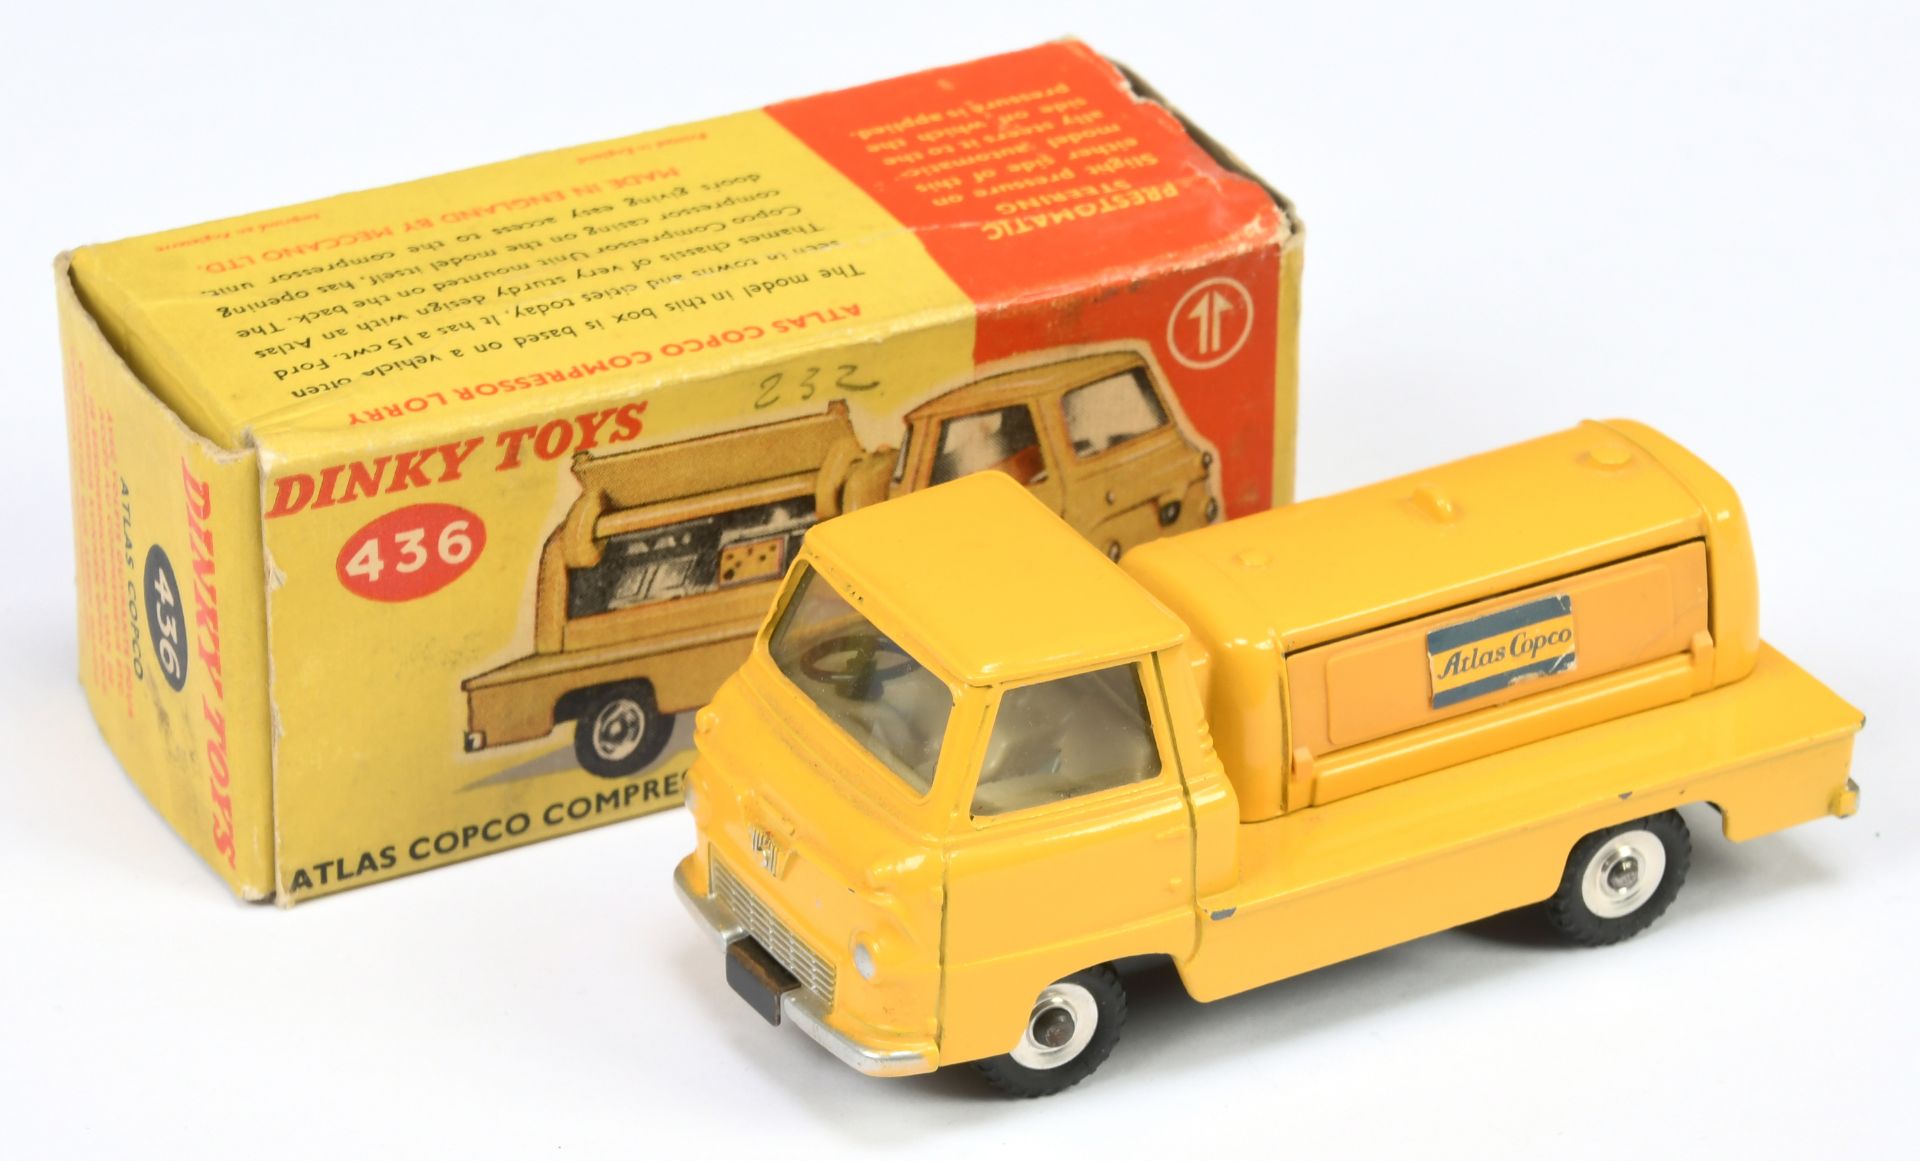 Dinky Toys 436 Atlas Copco Compressor Truck - Yellow body, light beige interior, chrome hubs